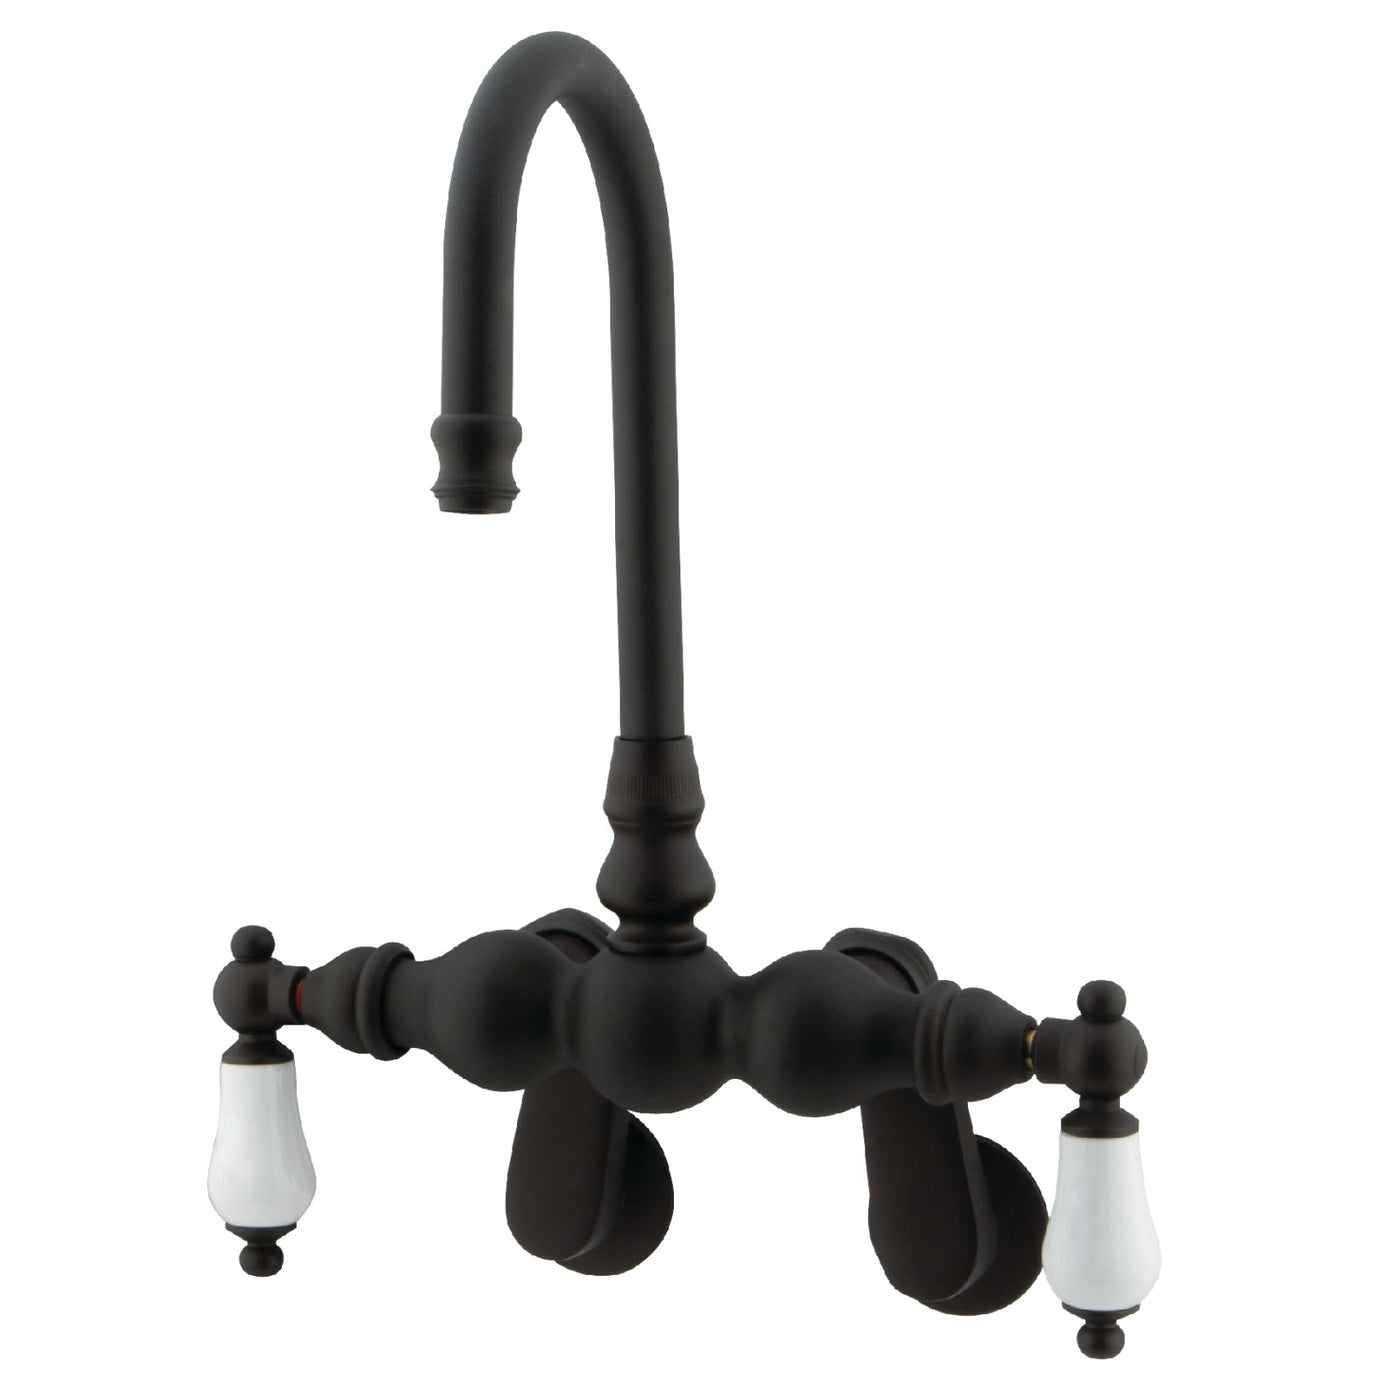 Elements of Design DT0815PL Adjustable Center Wall Mount Tub Faucet, Oil Rubbed Bronze